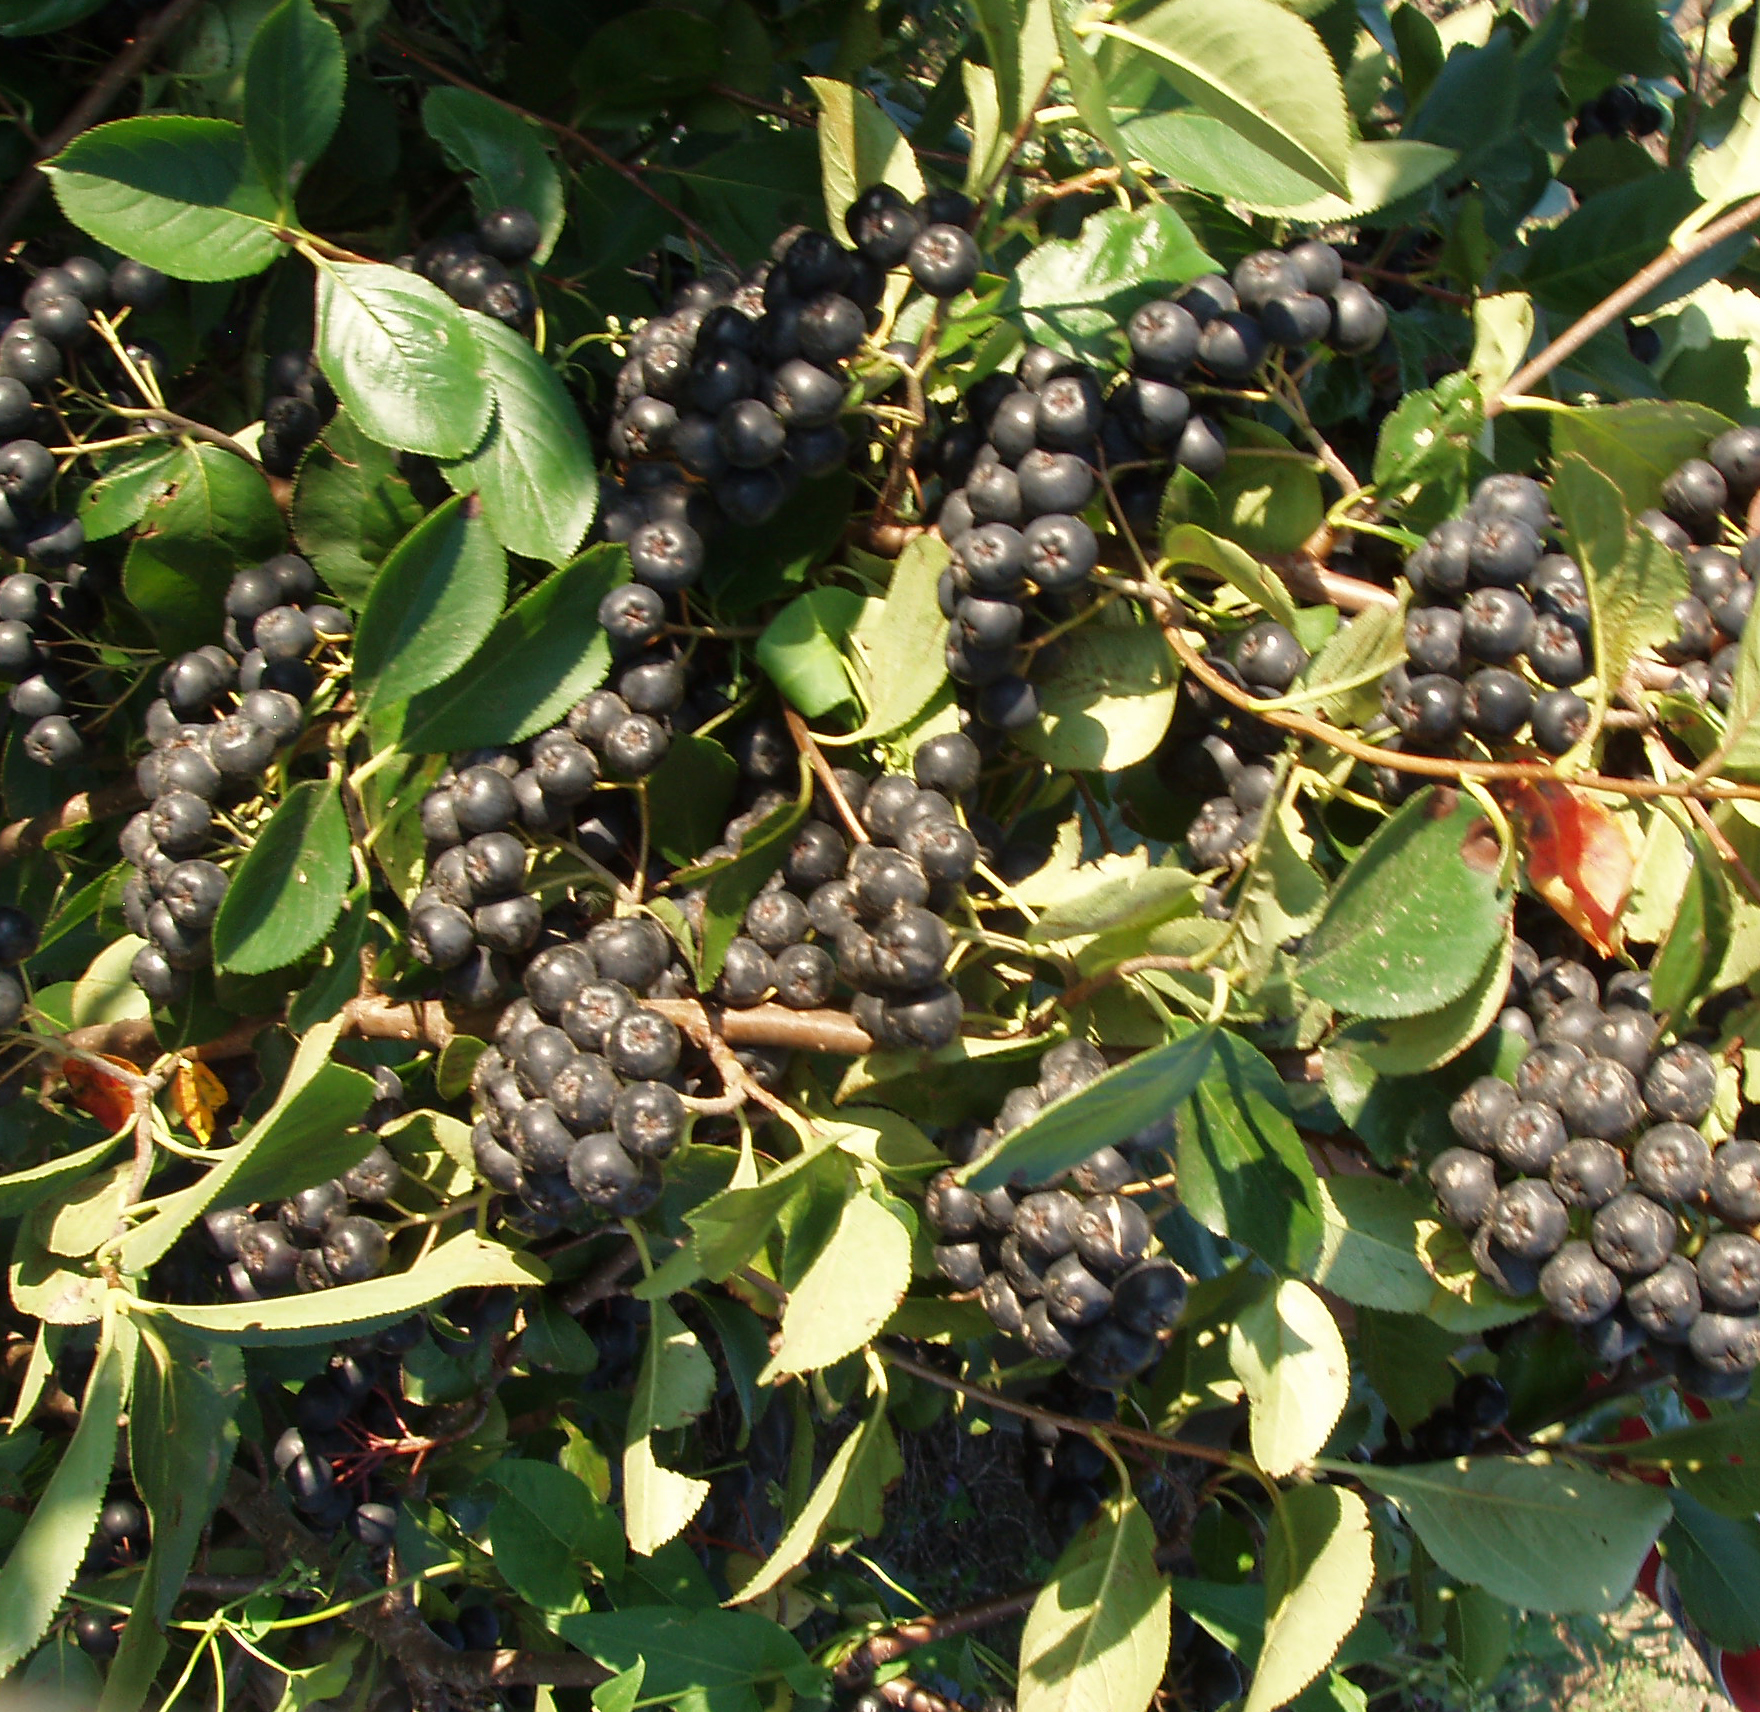 groups of ripe aronia berries of the Aronia melanocarpa variety